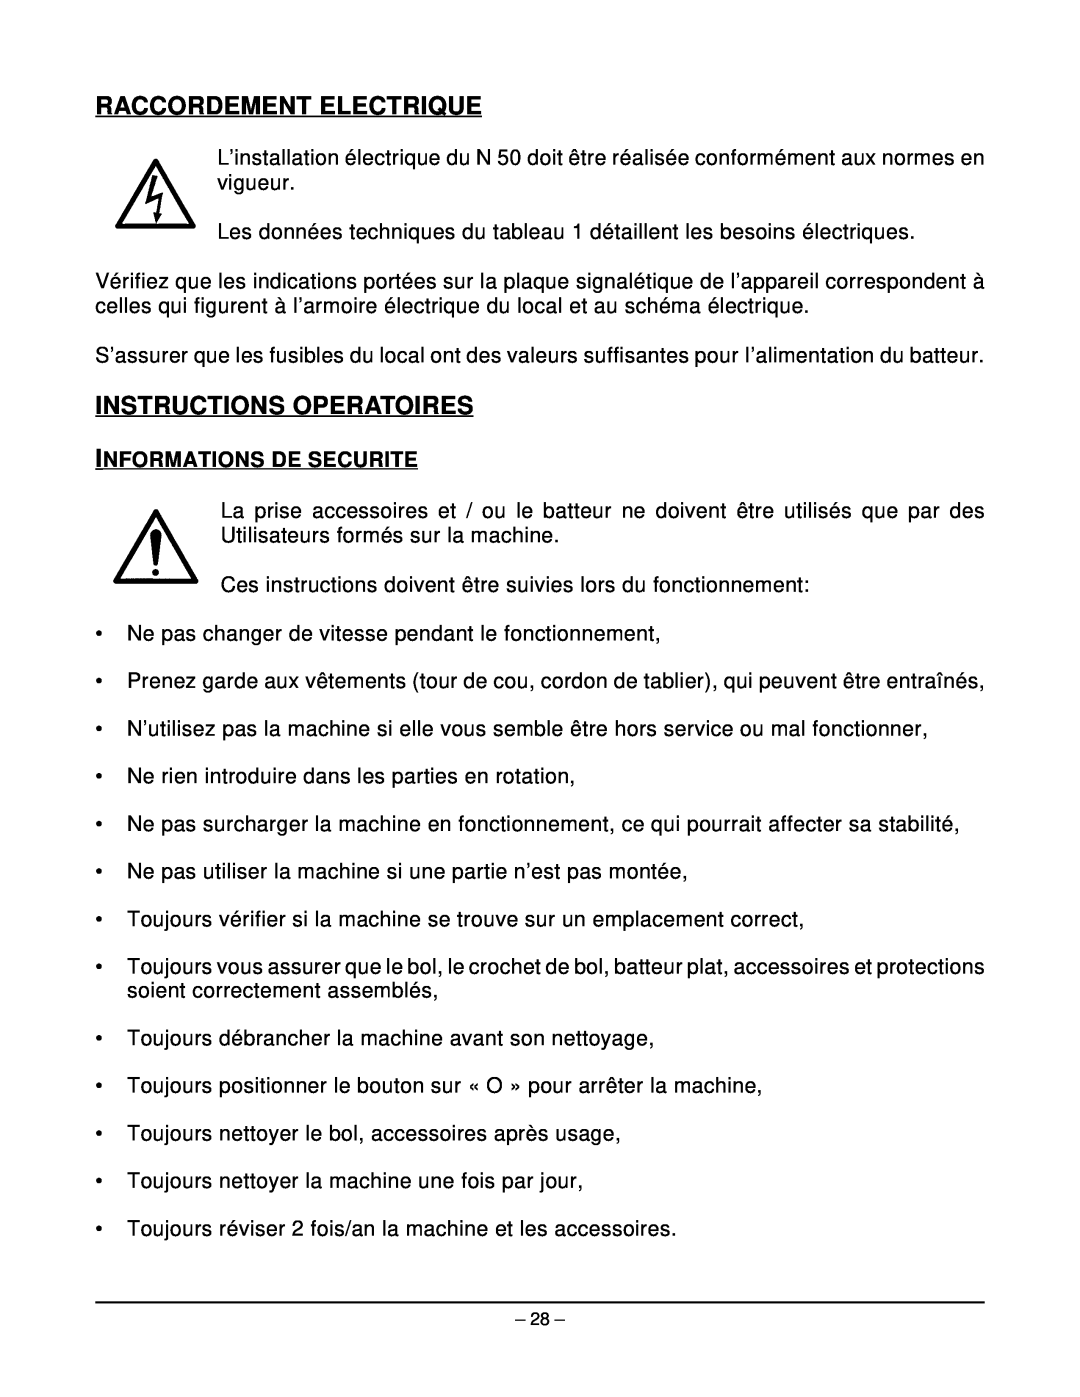 Hobart N50 MIXER manual Raccordement Electrique, Instructions Operatoires, Informations De Securite 